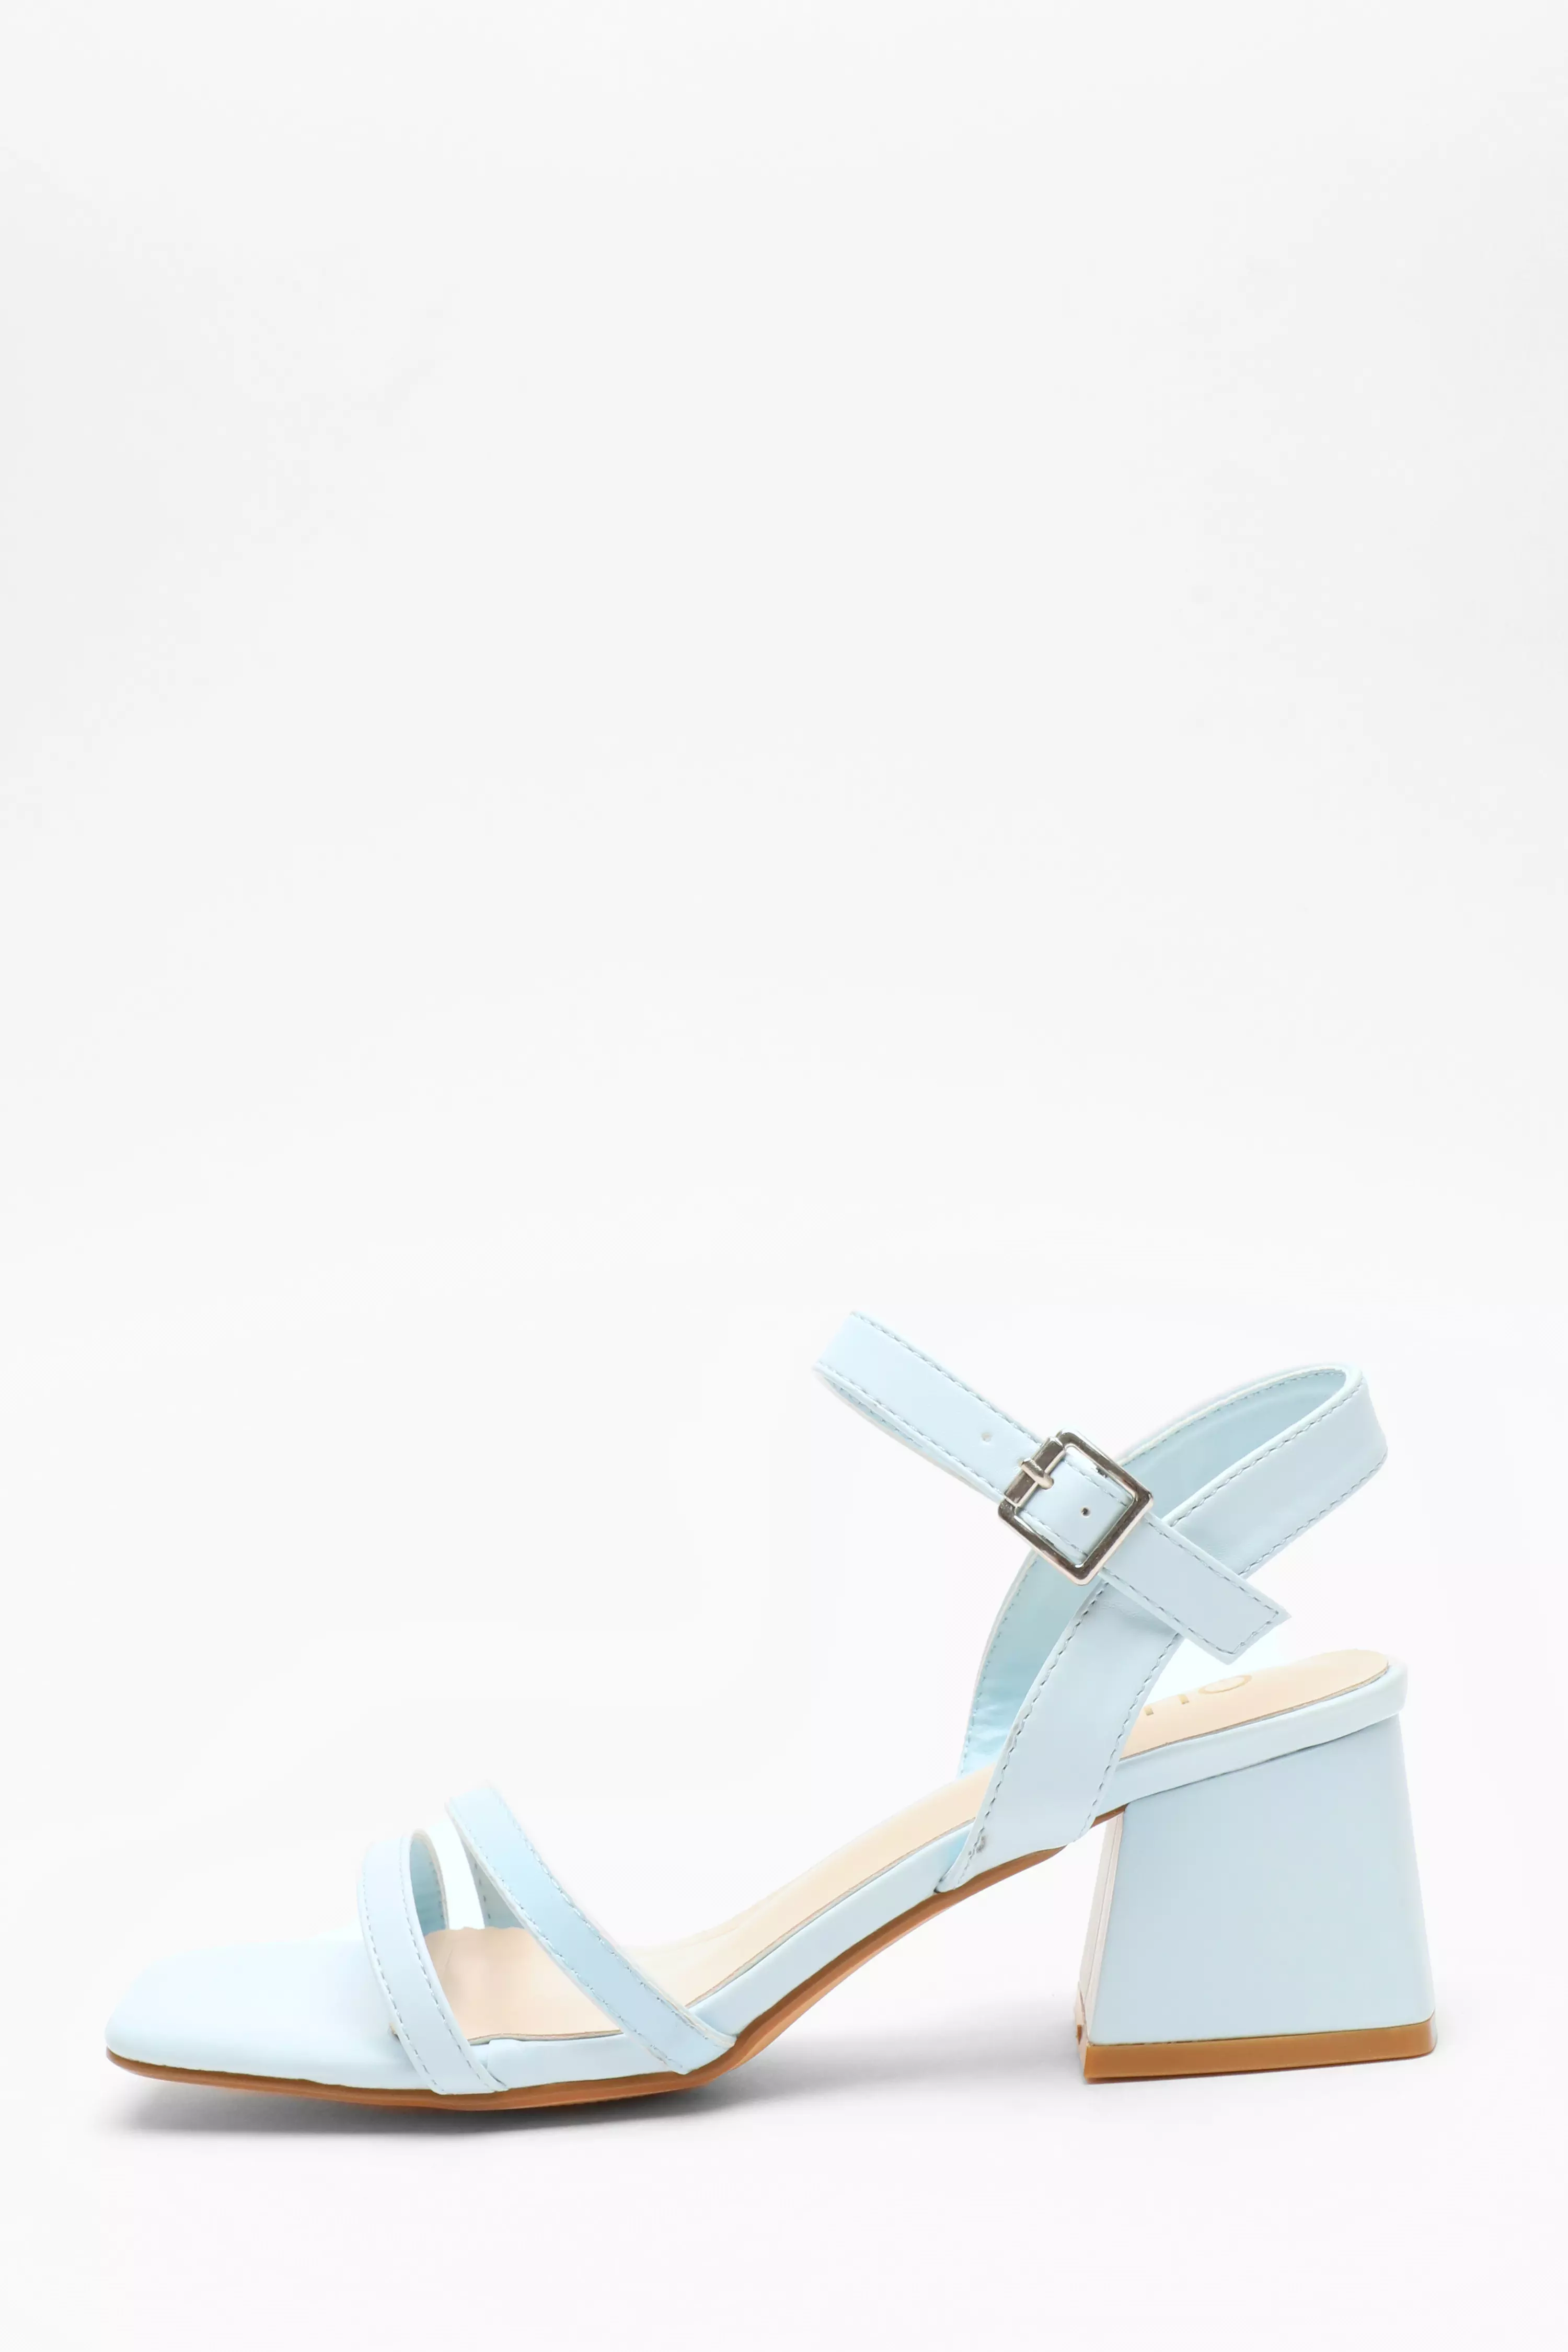 Blue Faux Leather Block Heel Sandal - QUIZ Clothing